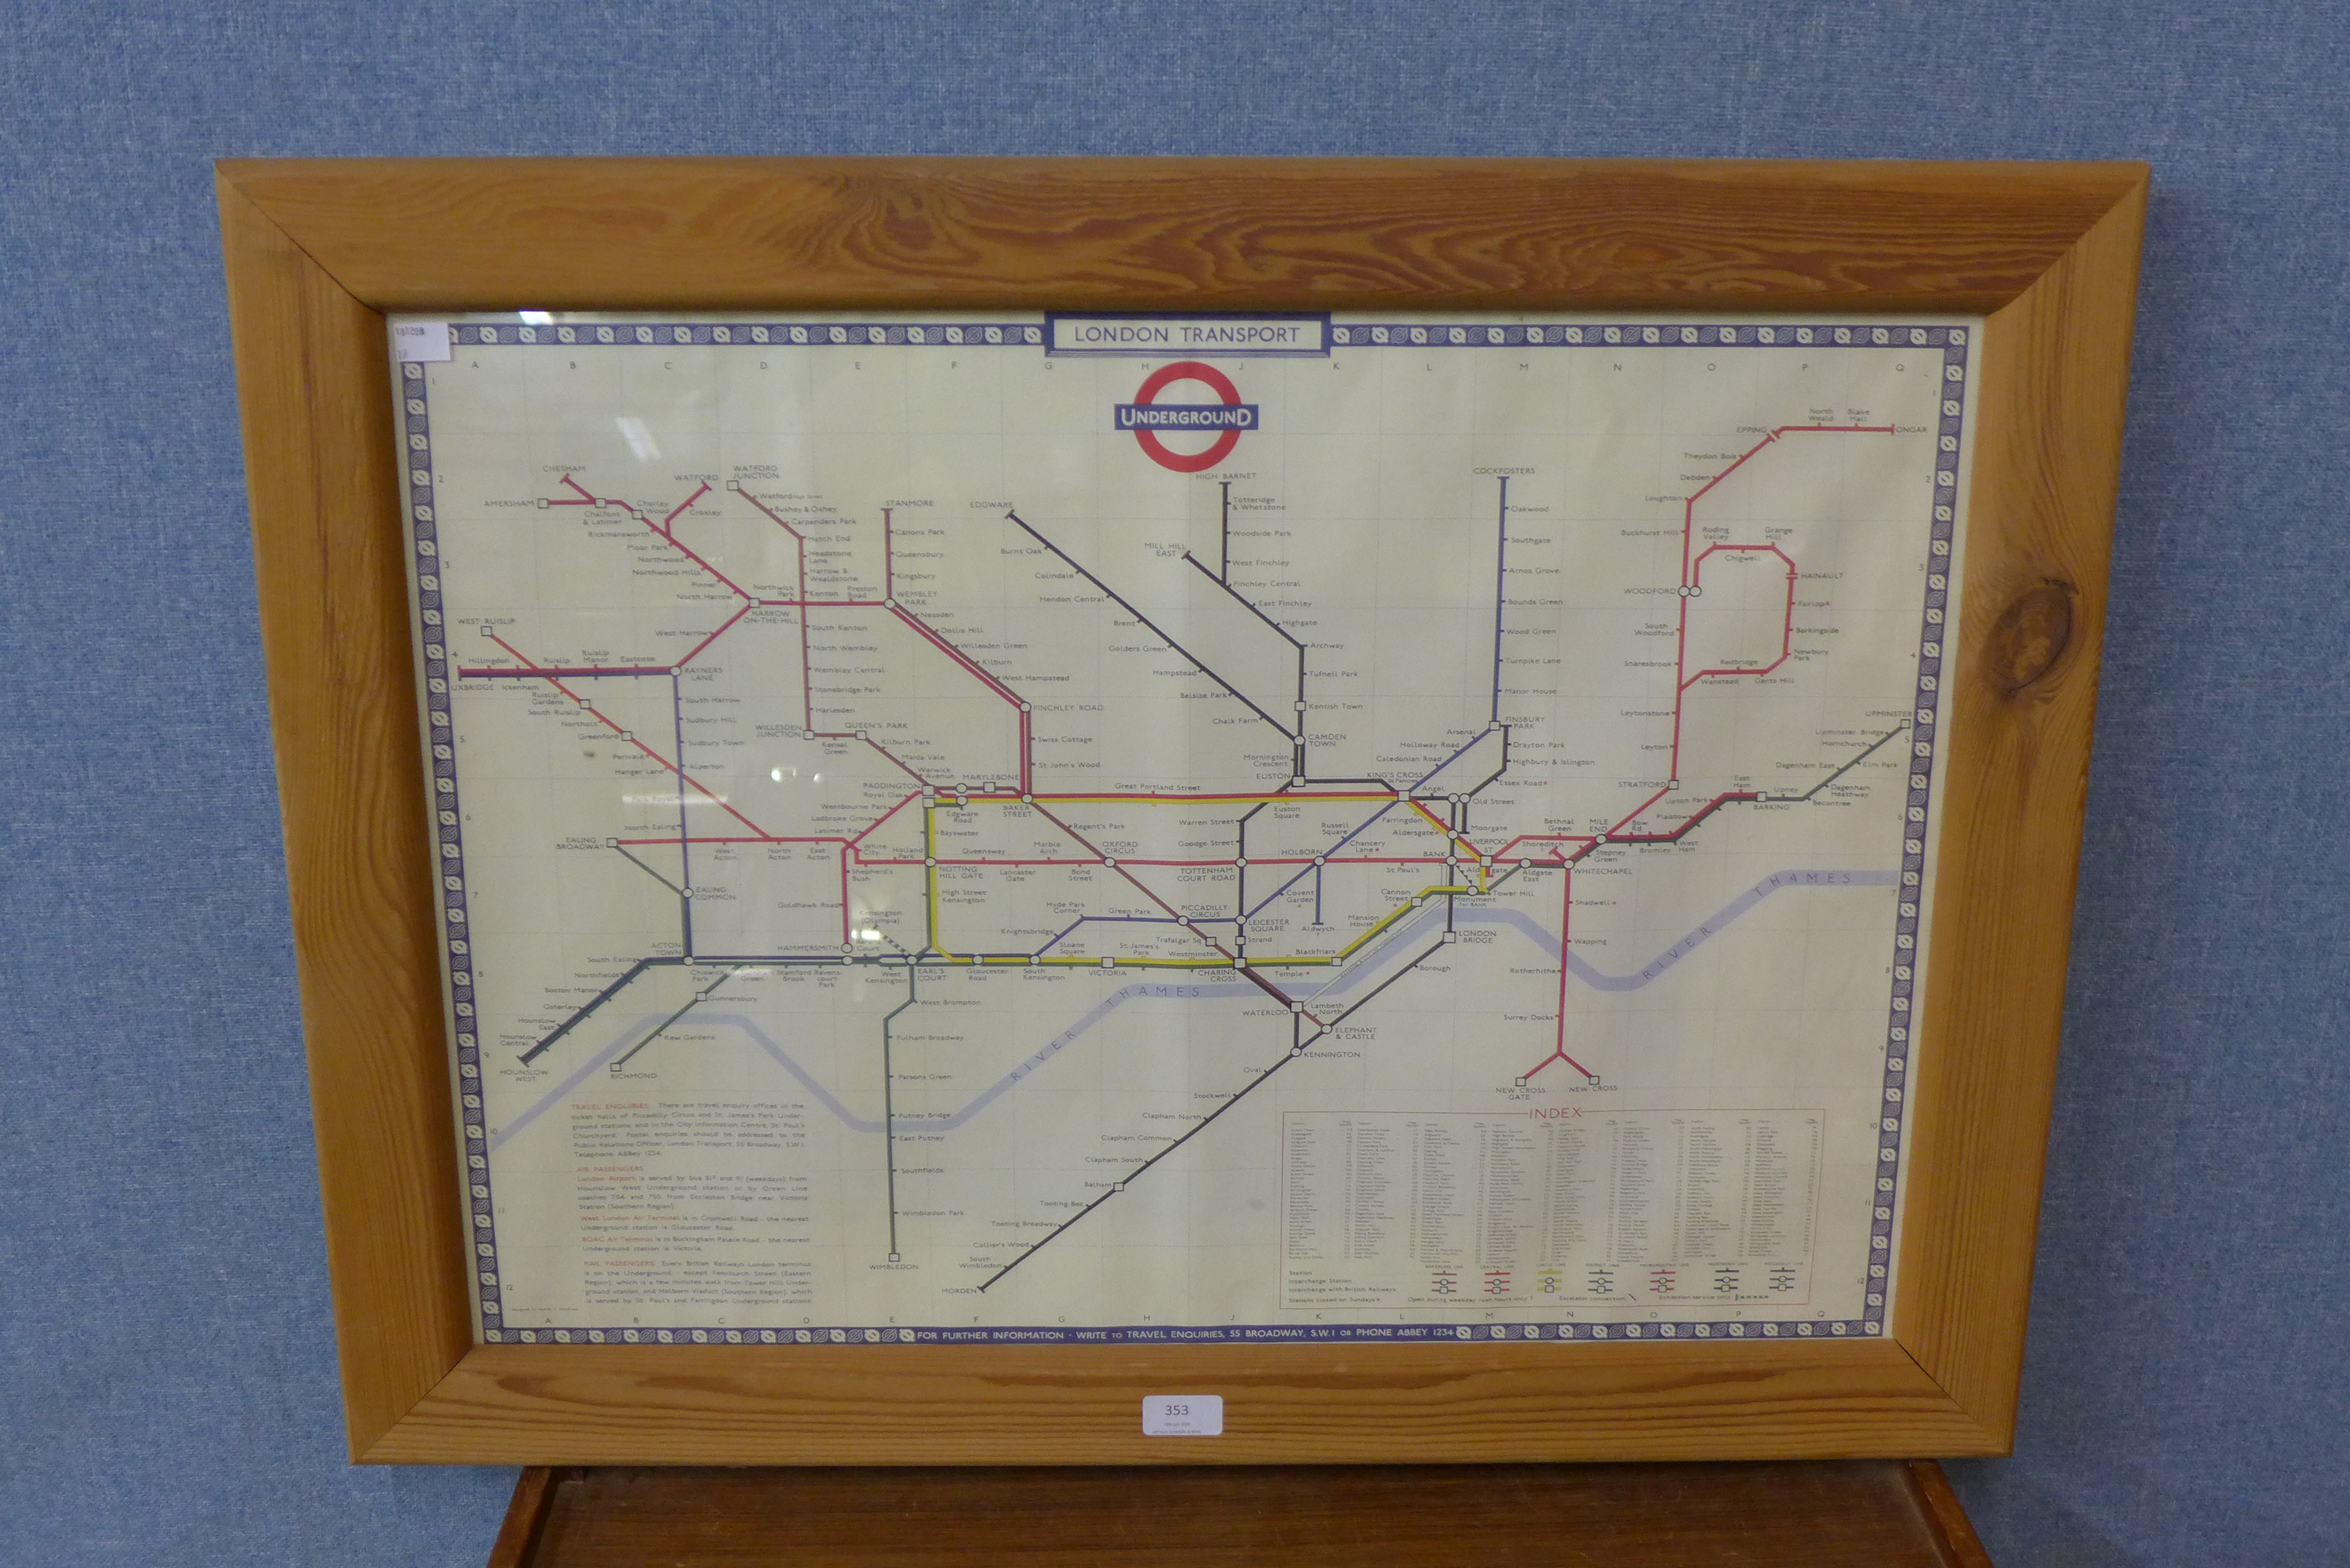 A London Transport underground map,